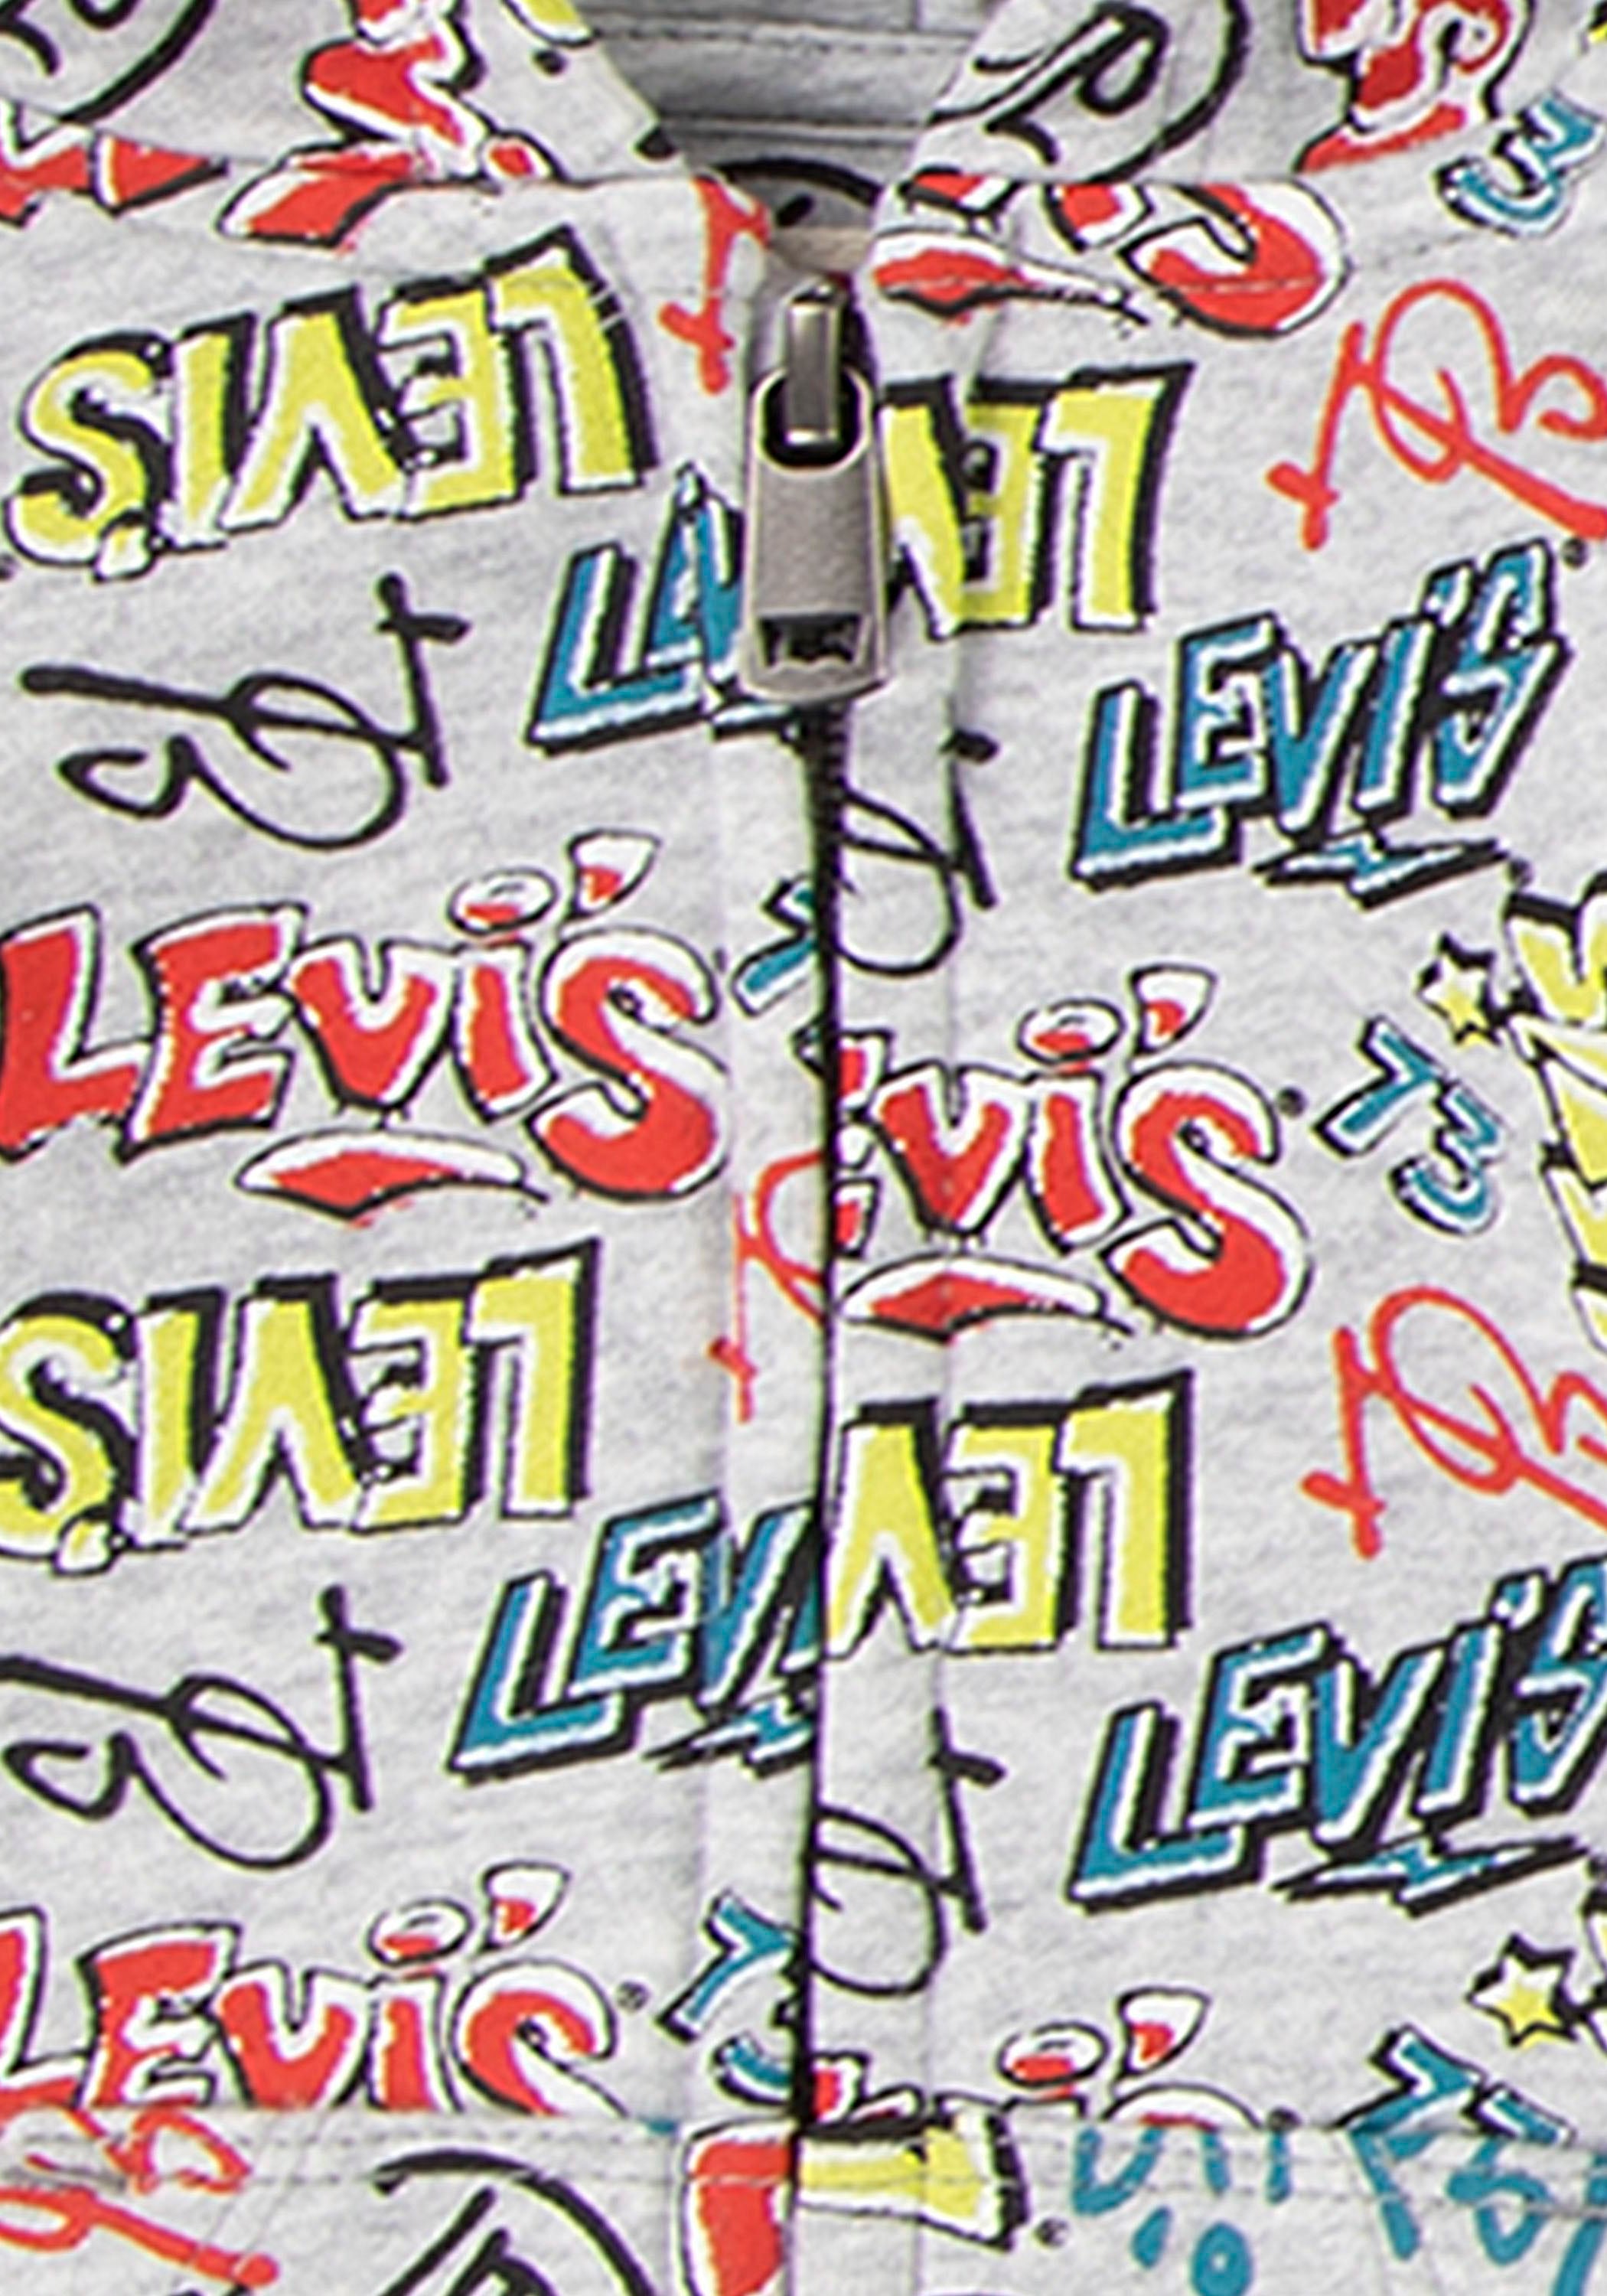 Levi's® Kids Shirt, Hose & Jäckchen »GRAFFITI TAG DENIM SET 3pc«, (Set, 3 tlg.), for Baby BOYS